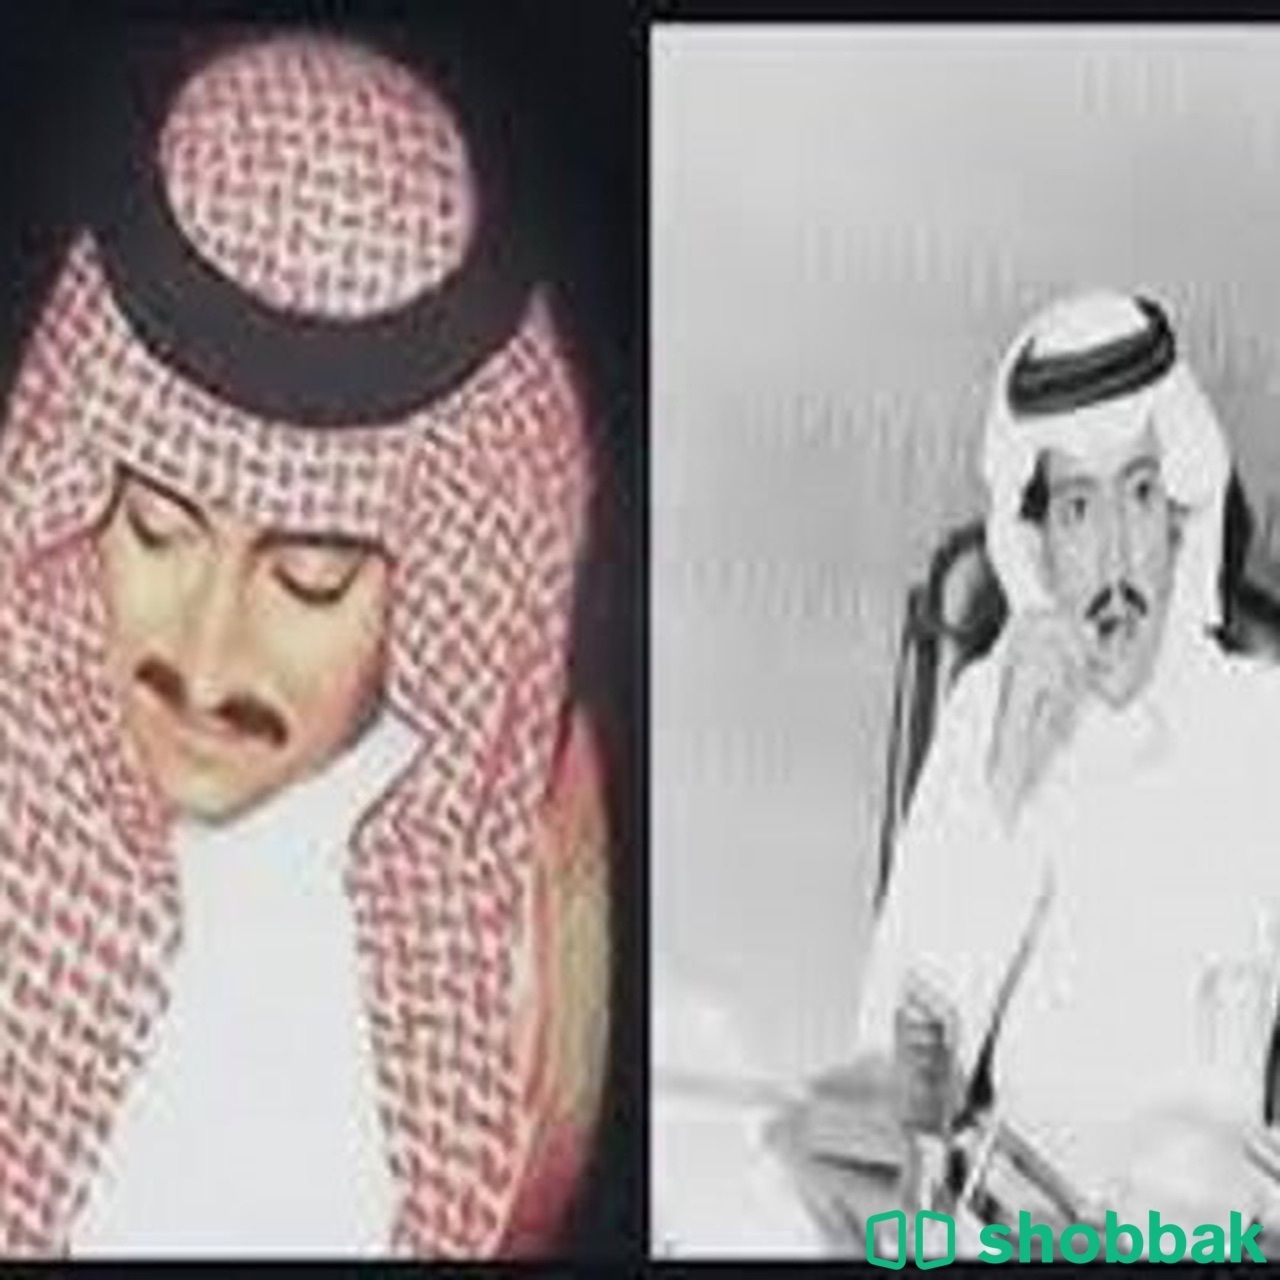 ديوان الامير سعود بن بندر  رحمه الله ( عليه توقيع اهداء ) Shobbak Saudi Arabia